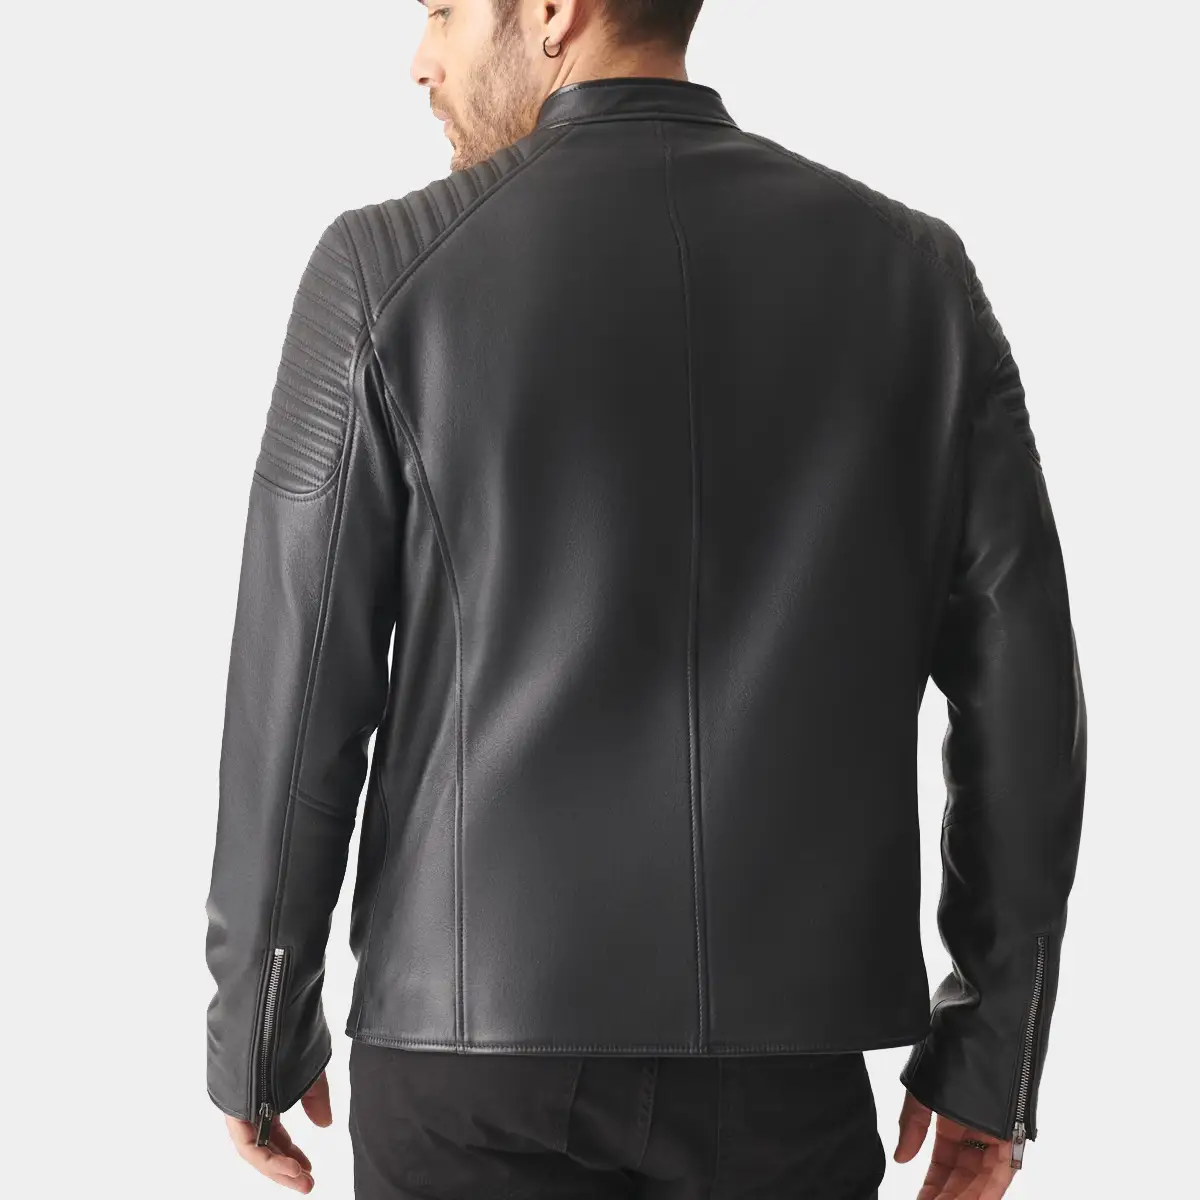 Motorcycle leather jacket fo rmen